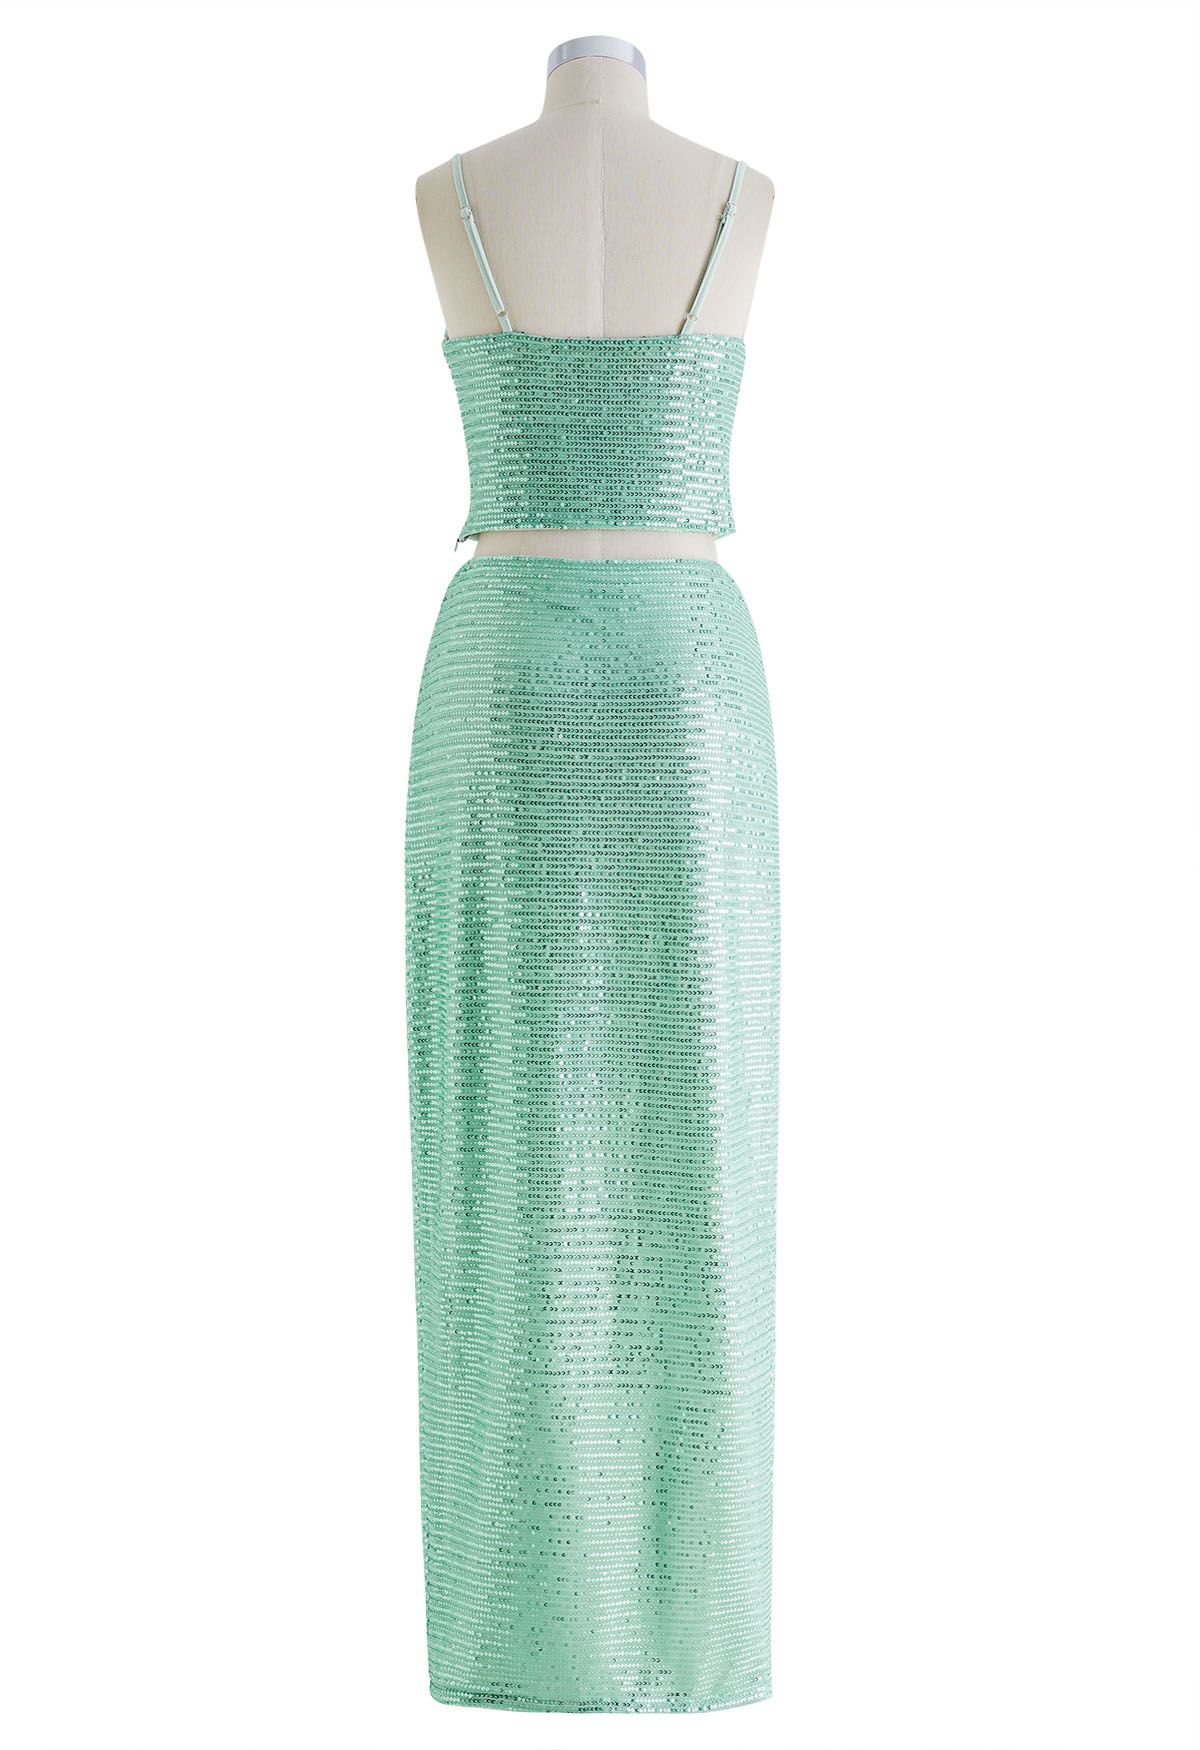 Sparkling Sequin Cami Top and High Slit Skirt Set